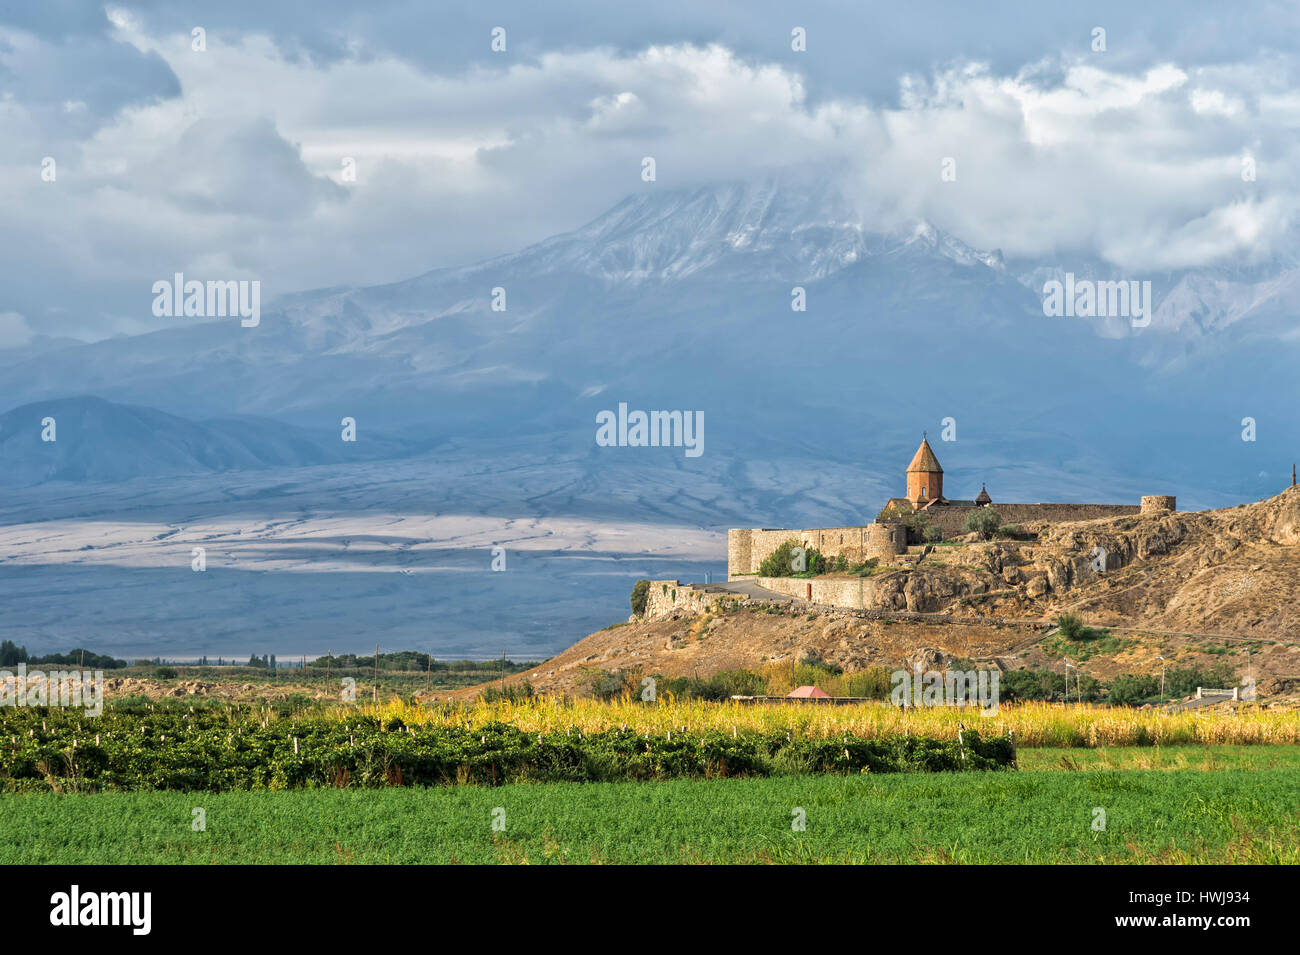 Khor Virap Monastery and apostolic church at the foot of Mount Ararat, Ararat Province, Armenia, Caucasus, Middle East, Asia Stock Photo